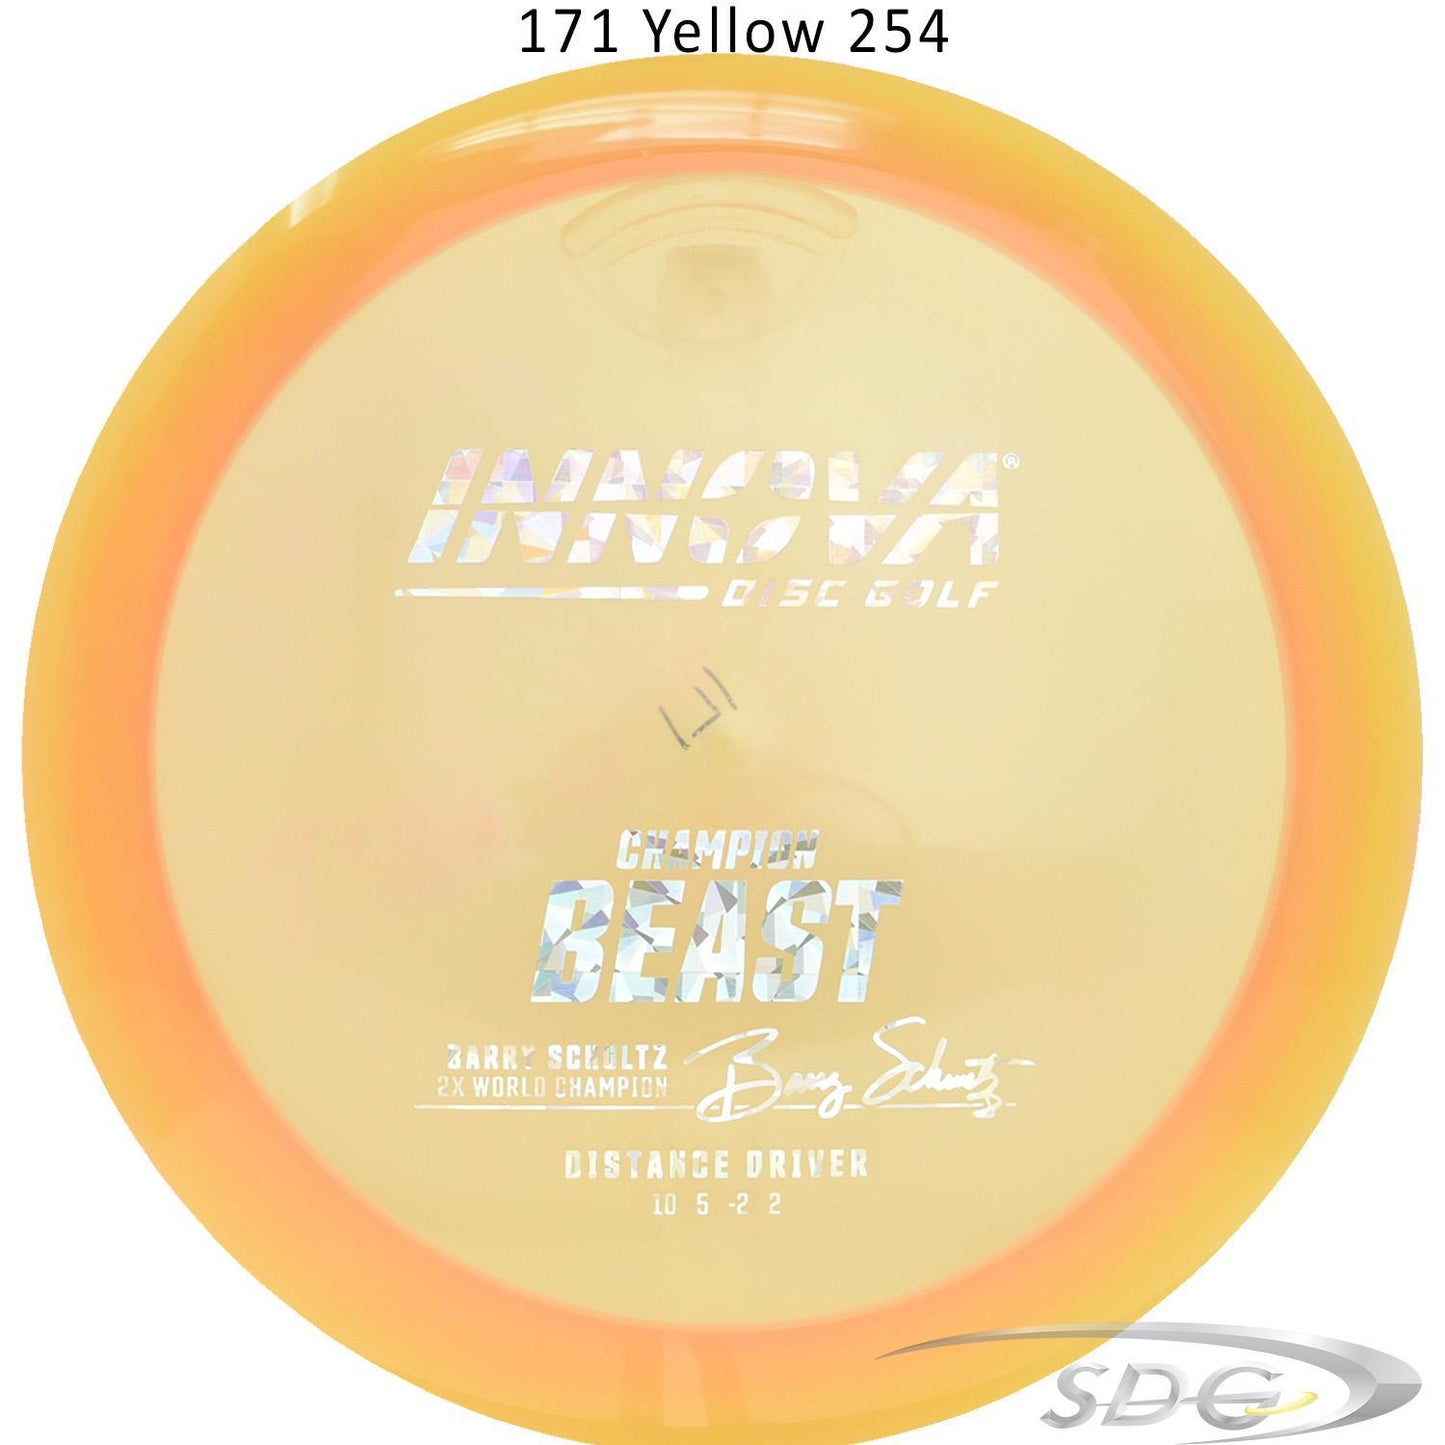 innova-champion-beast-disc-golf-distance-driver 171 Yellow 254